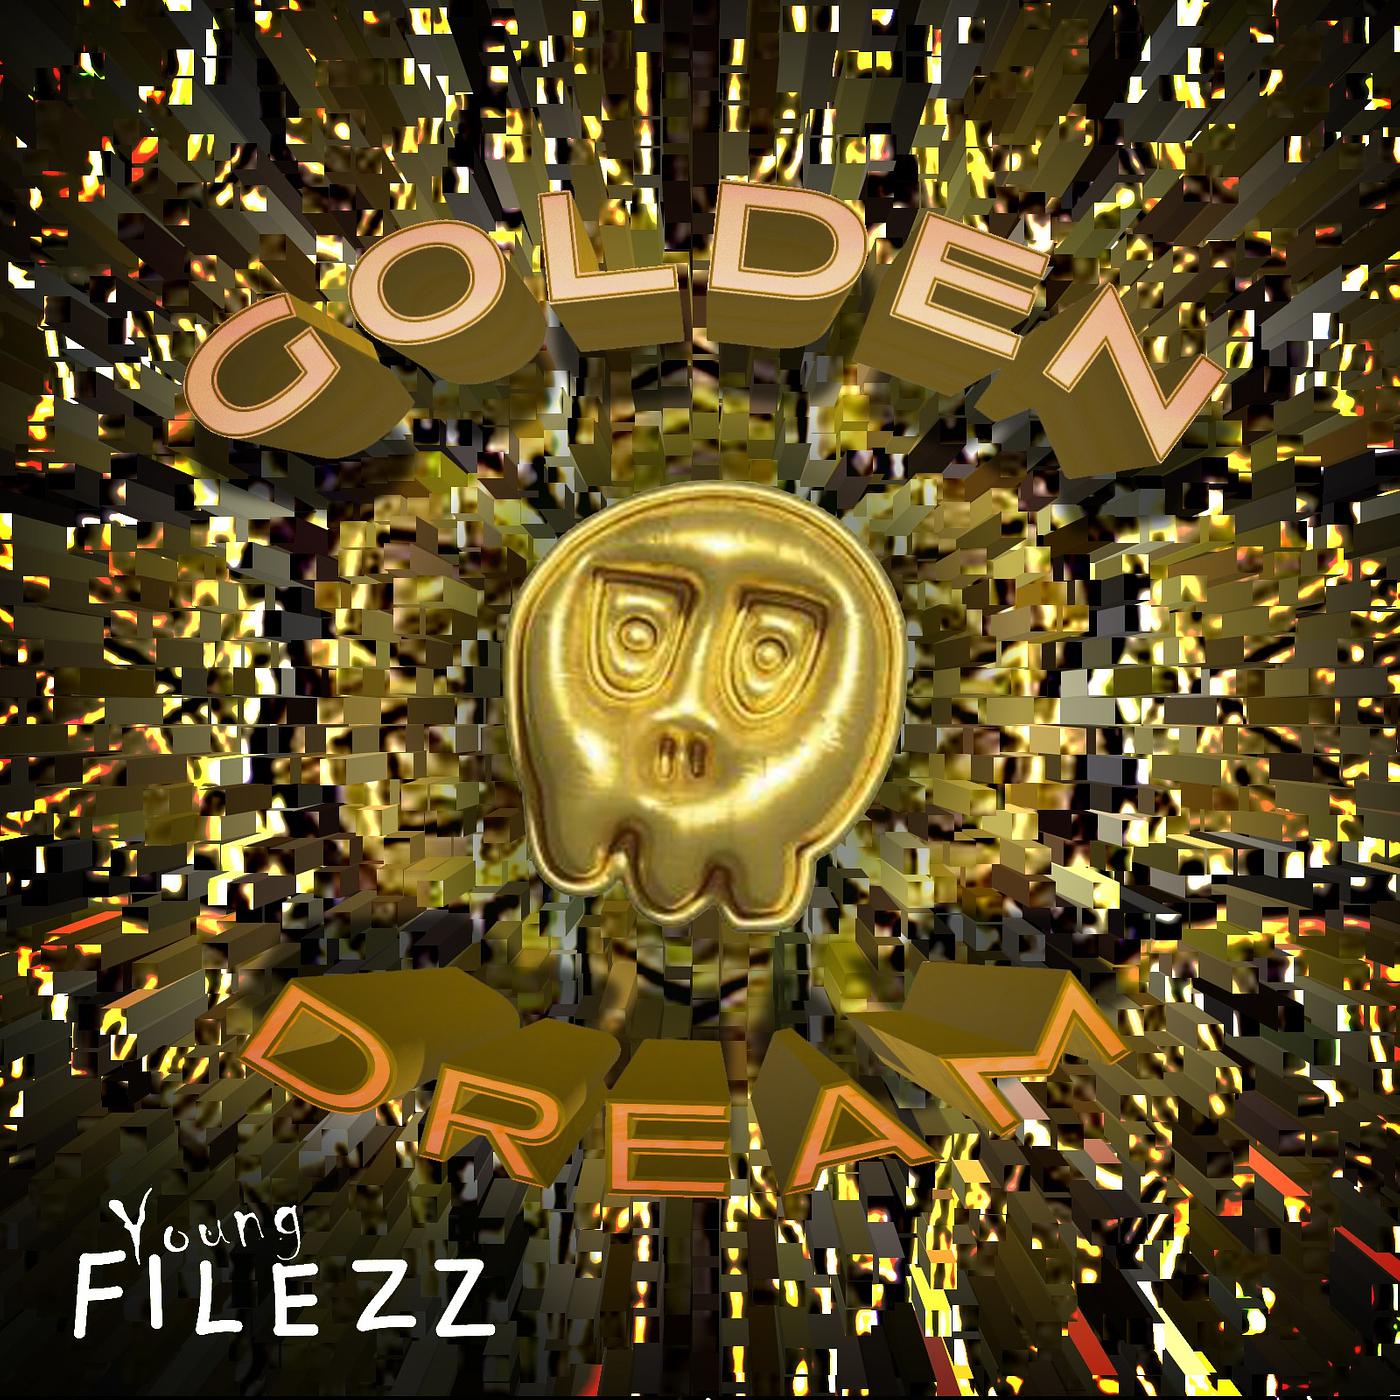 Постер альбома Golden Dream